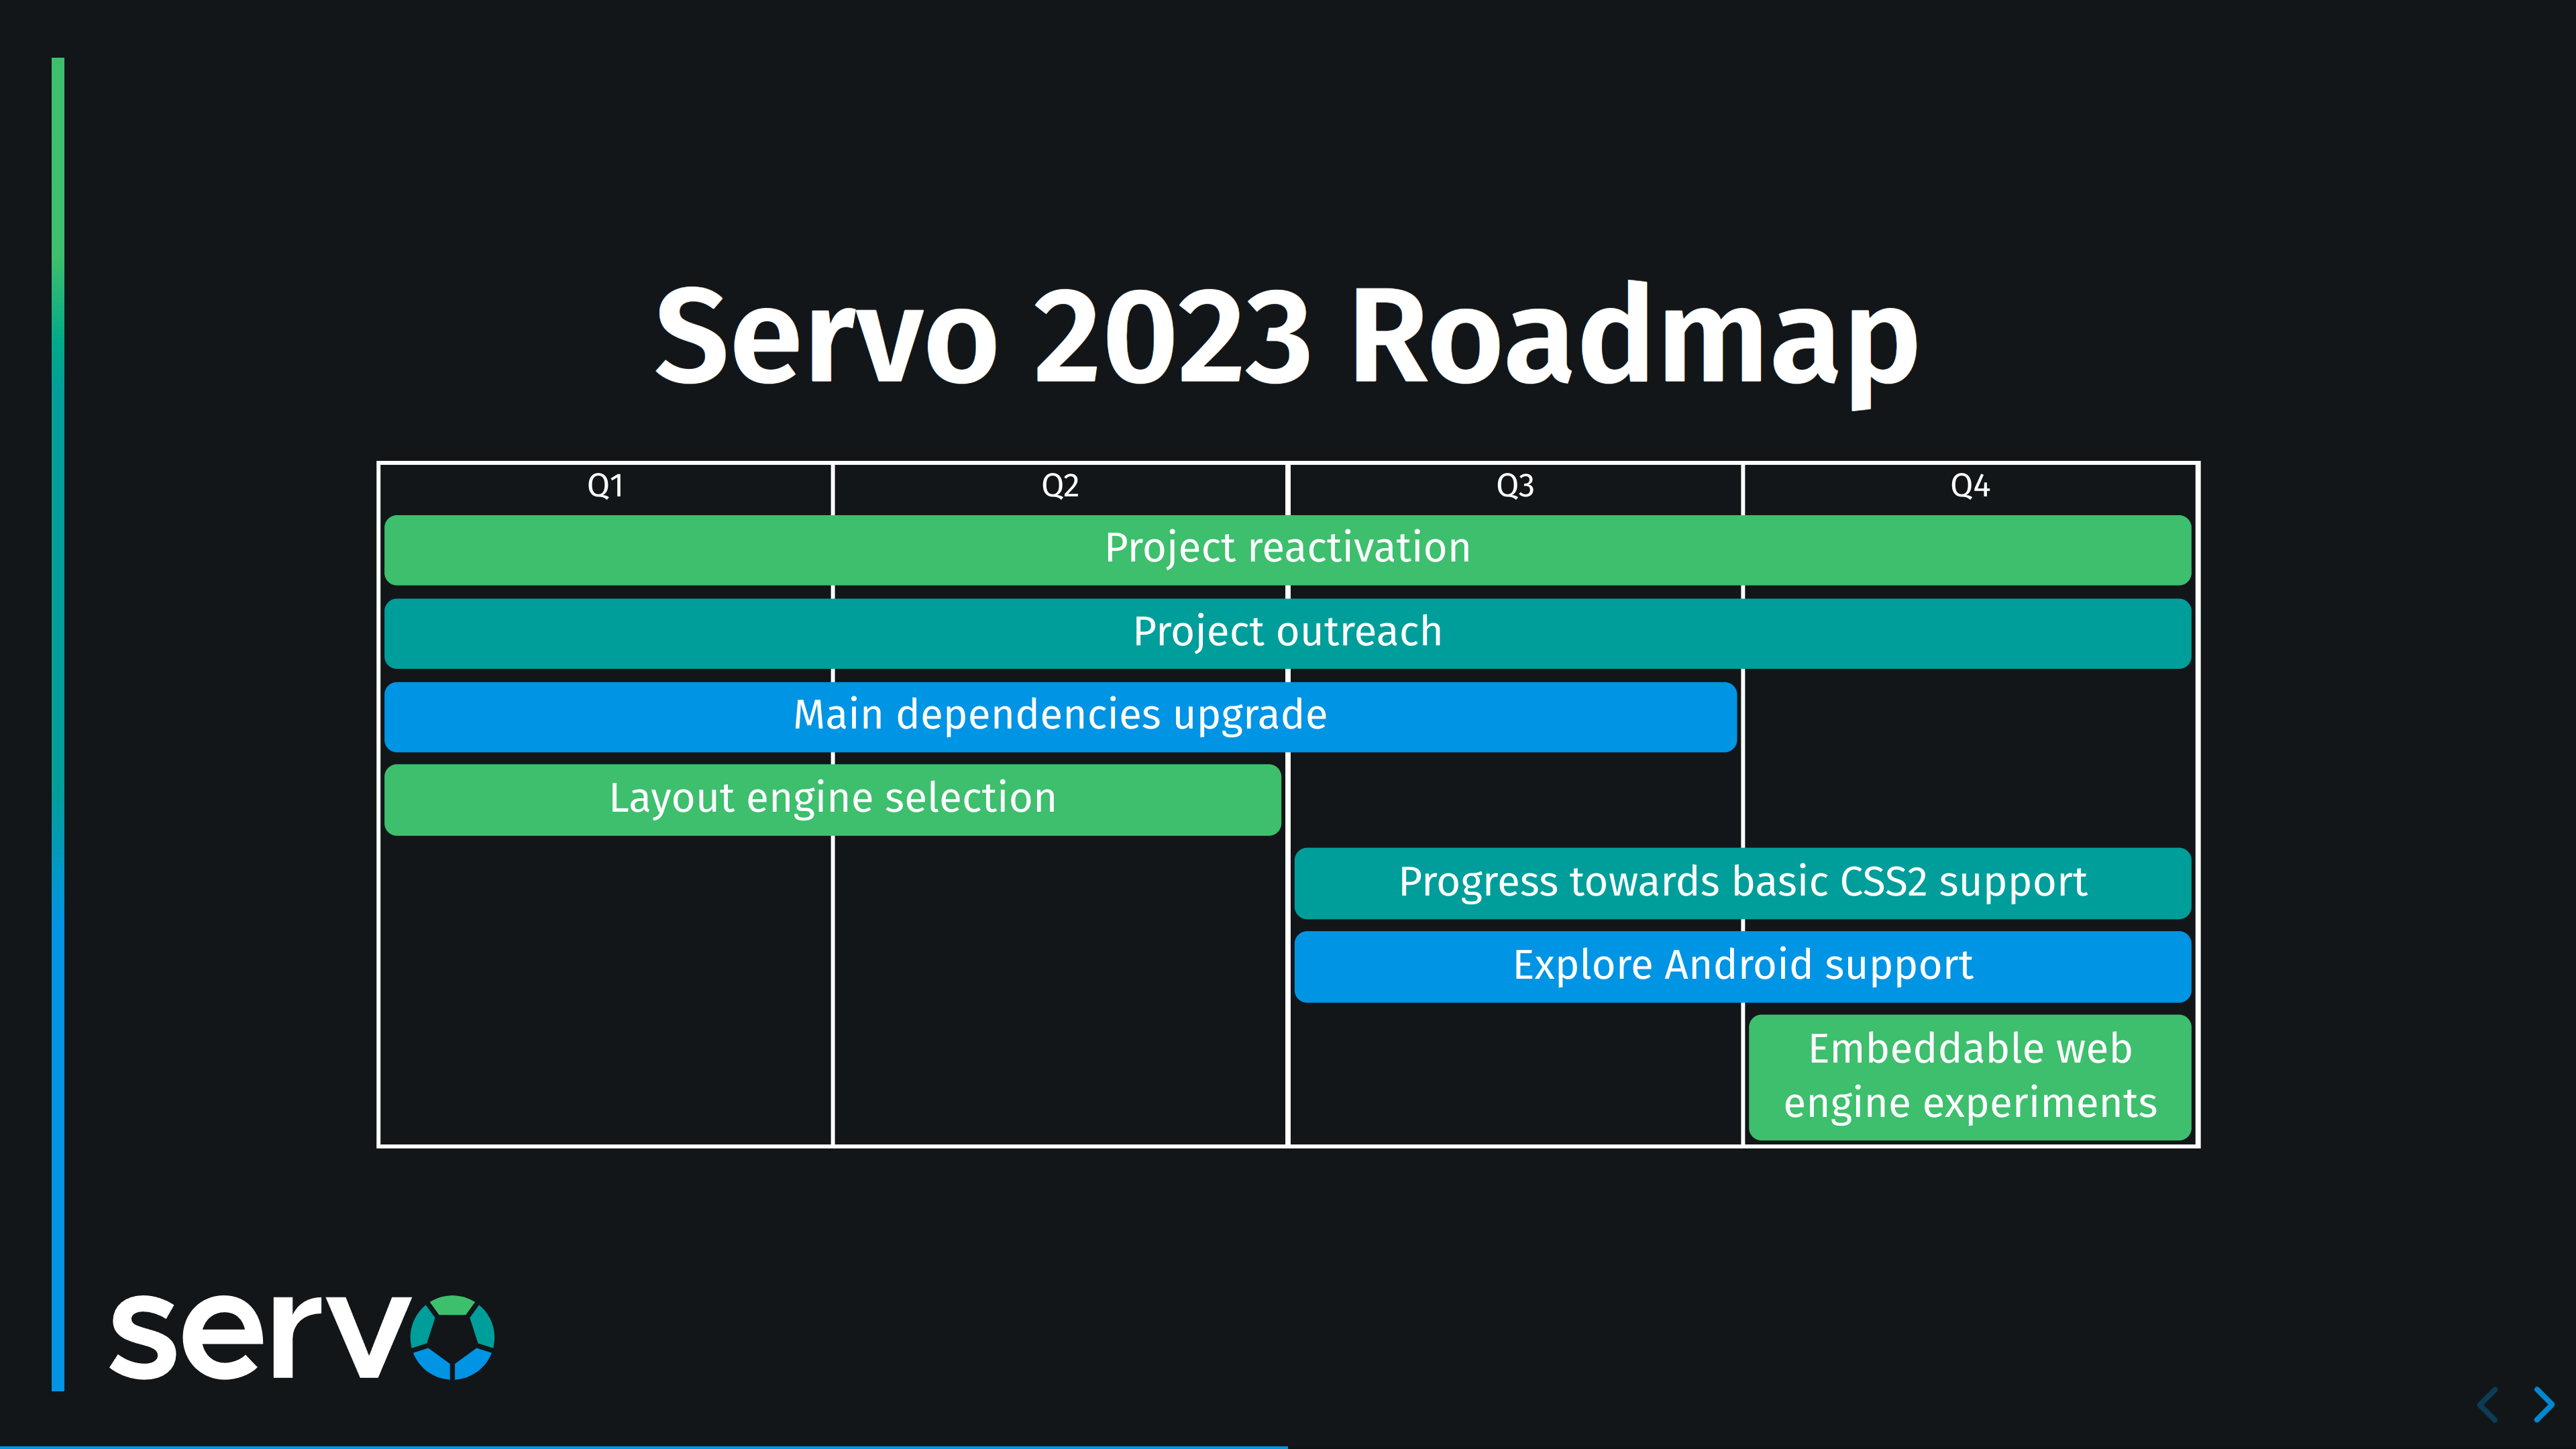 Servo 2023 Roadmap. Project reactivation Q1-Q4. Project outreach Q1-Q4. Main dependencies upgrade Q1-Q3. Layout engine selection Q1-Q2. Progress towards basic CSS2 support Q3-Q4. Explore Android support Q3-Q4. Embeddable web engine experiments Q4.